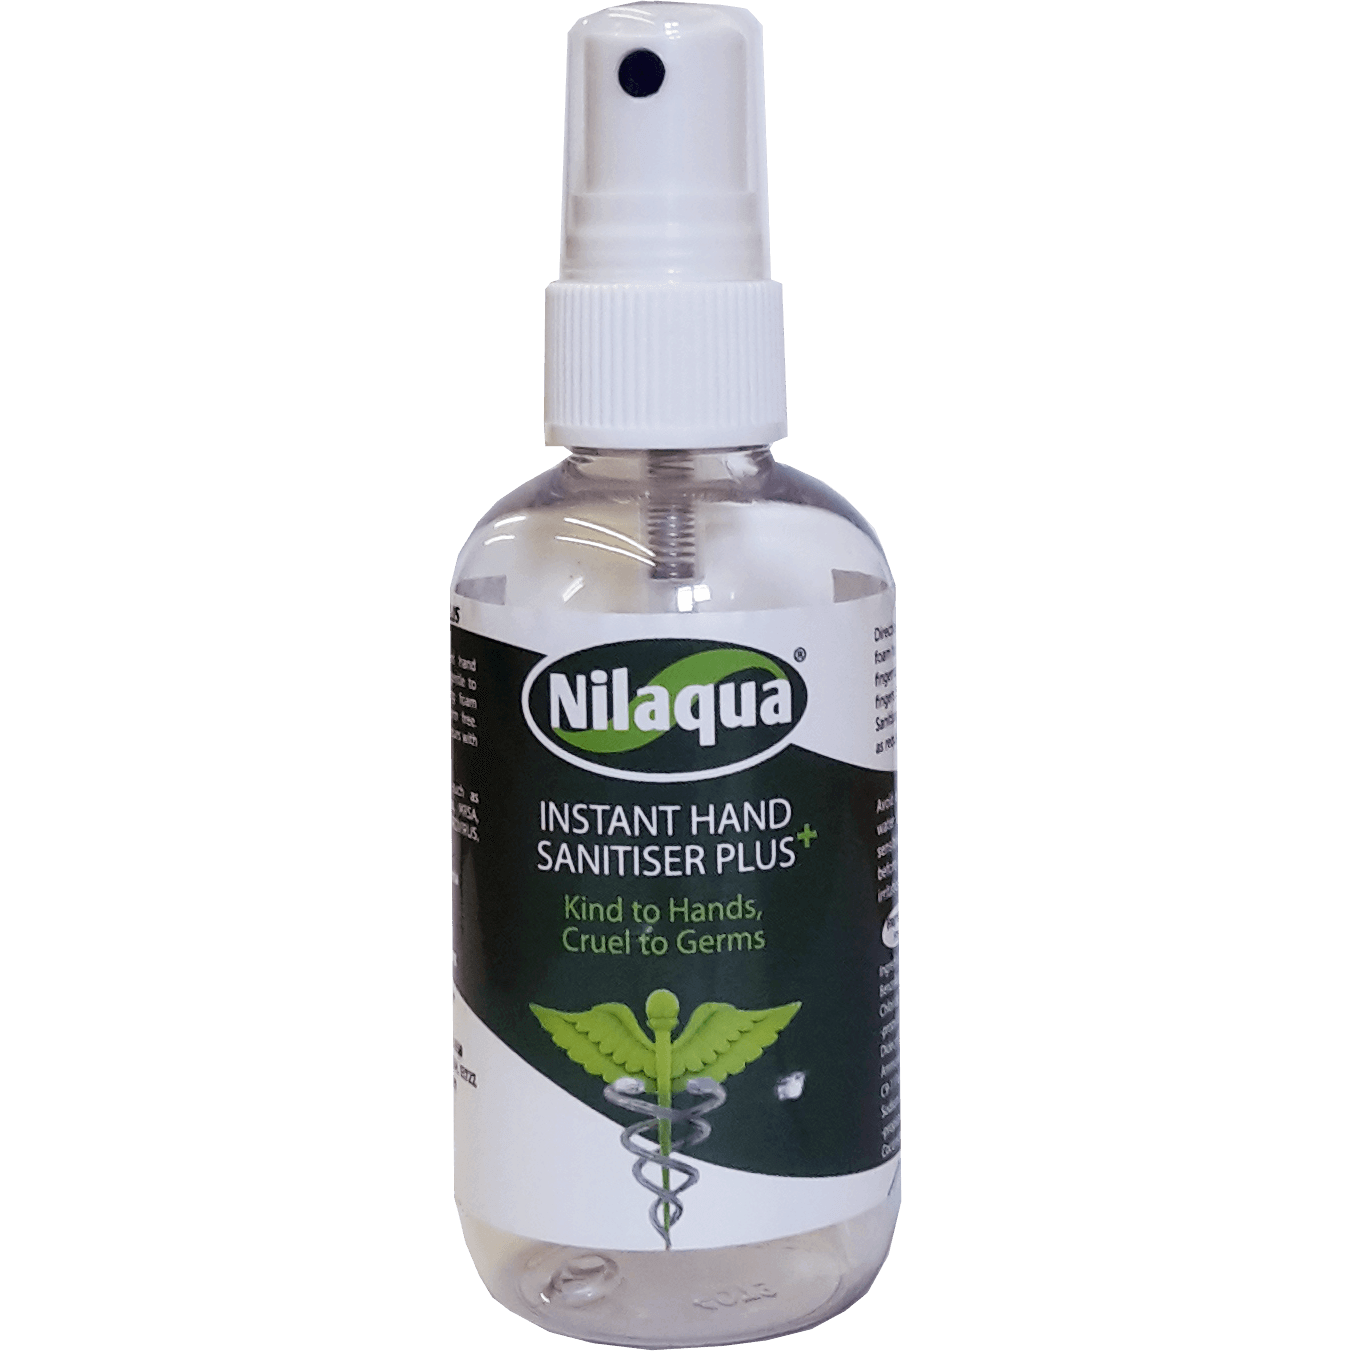 Nilaqua Hand Sanitiser Products